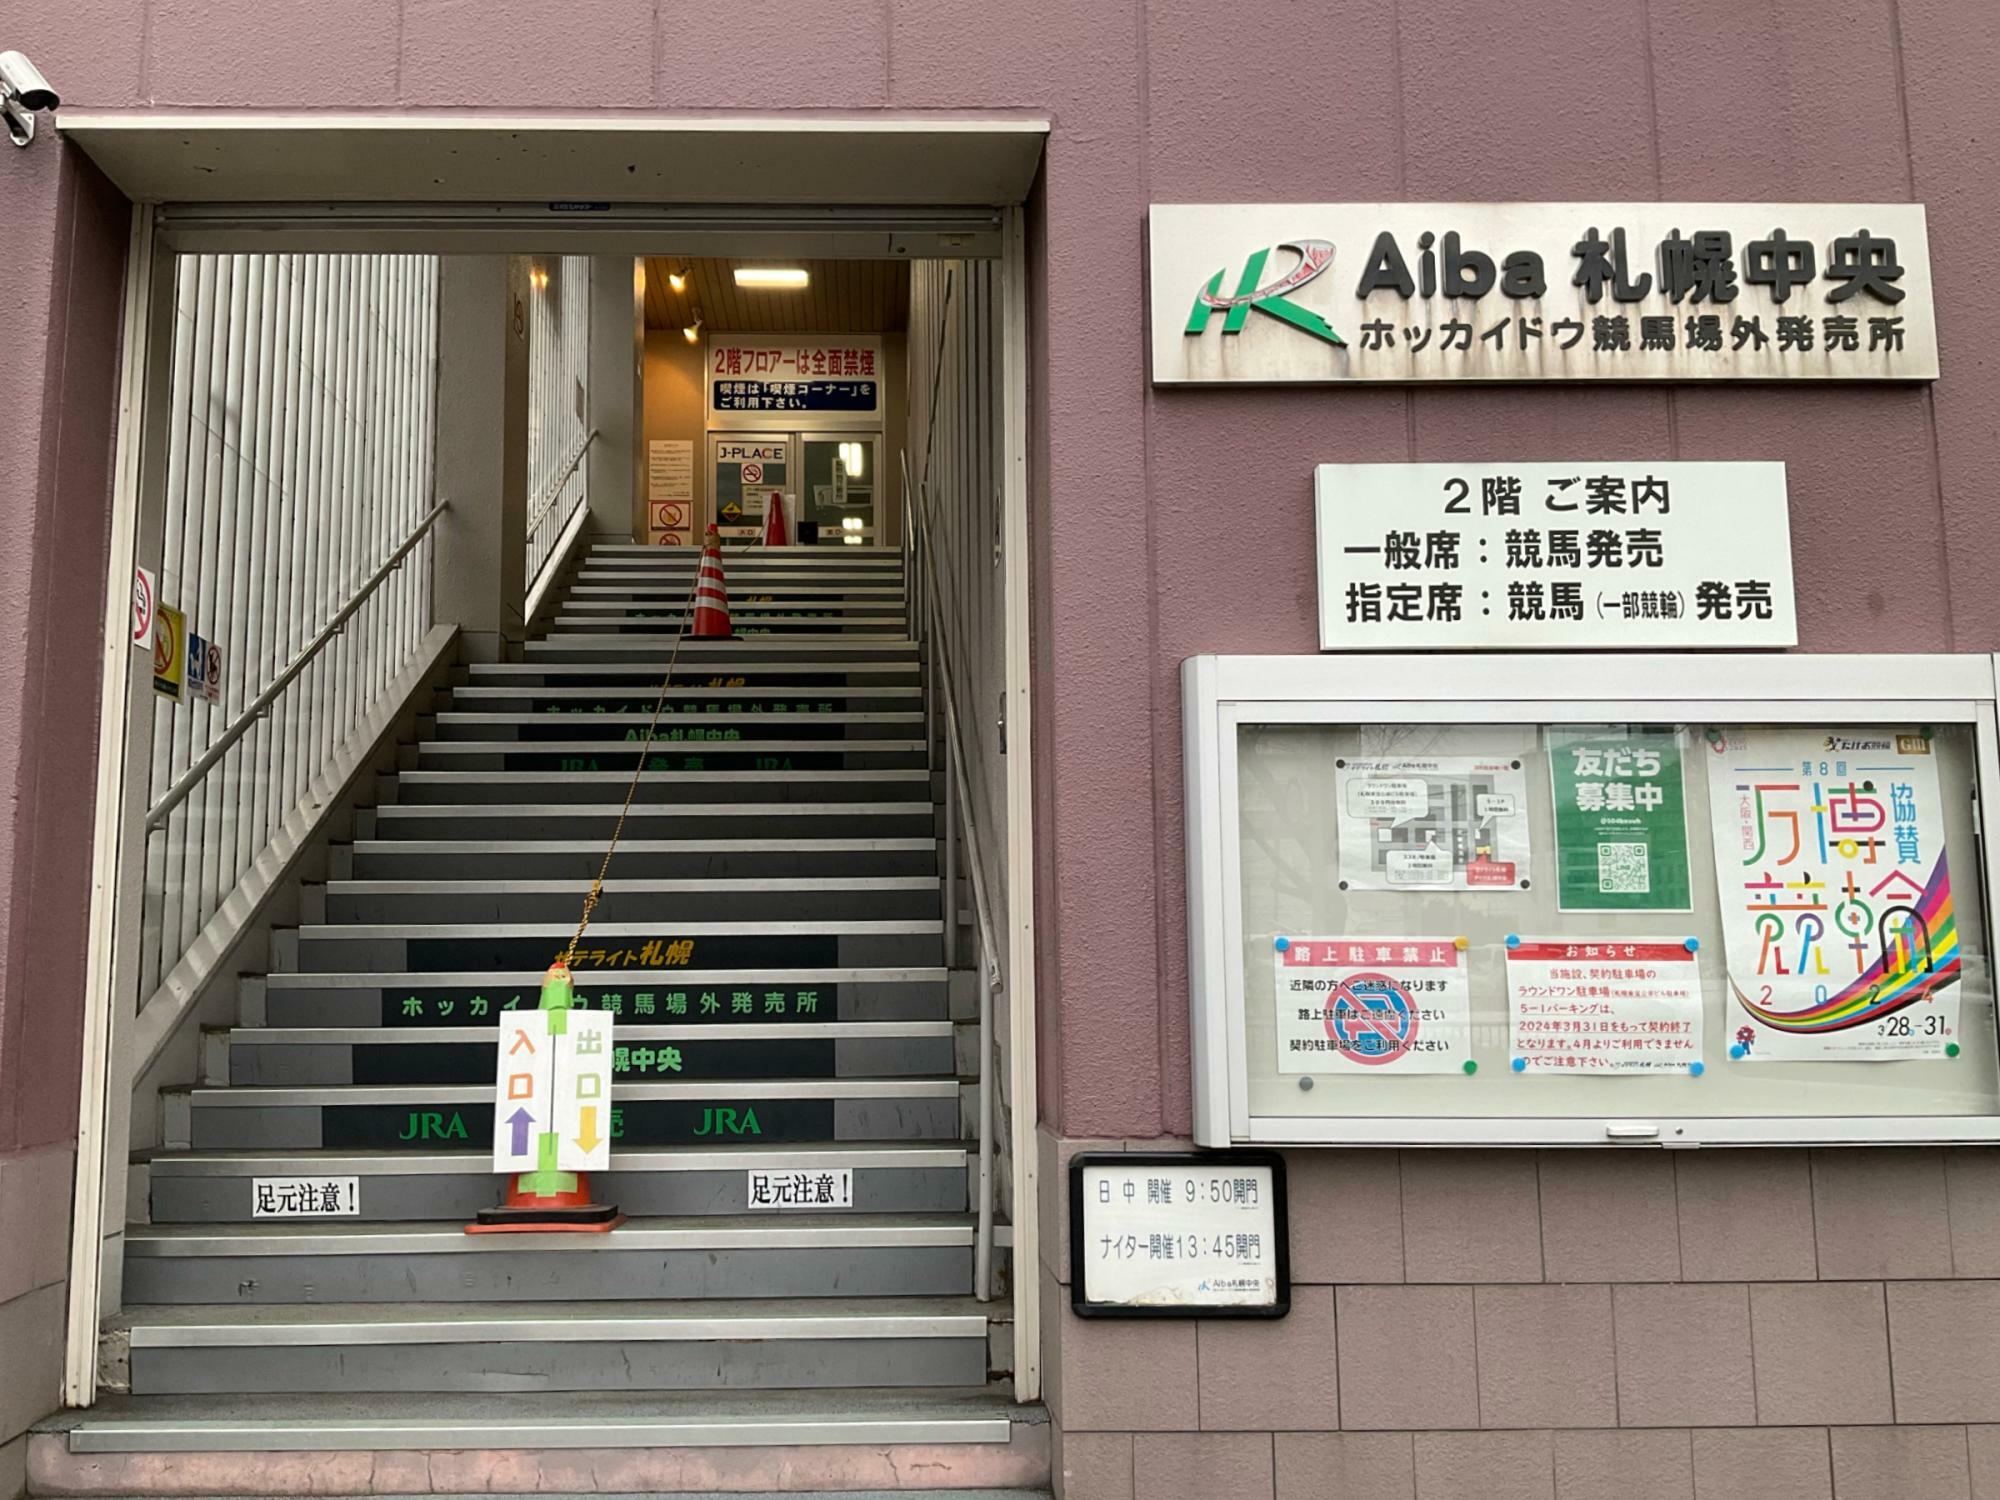 Aiba札幌中央は「日中開催 9:50開門」「 ナイター開催 13:45開門」です。